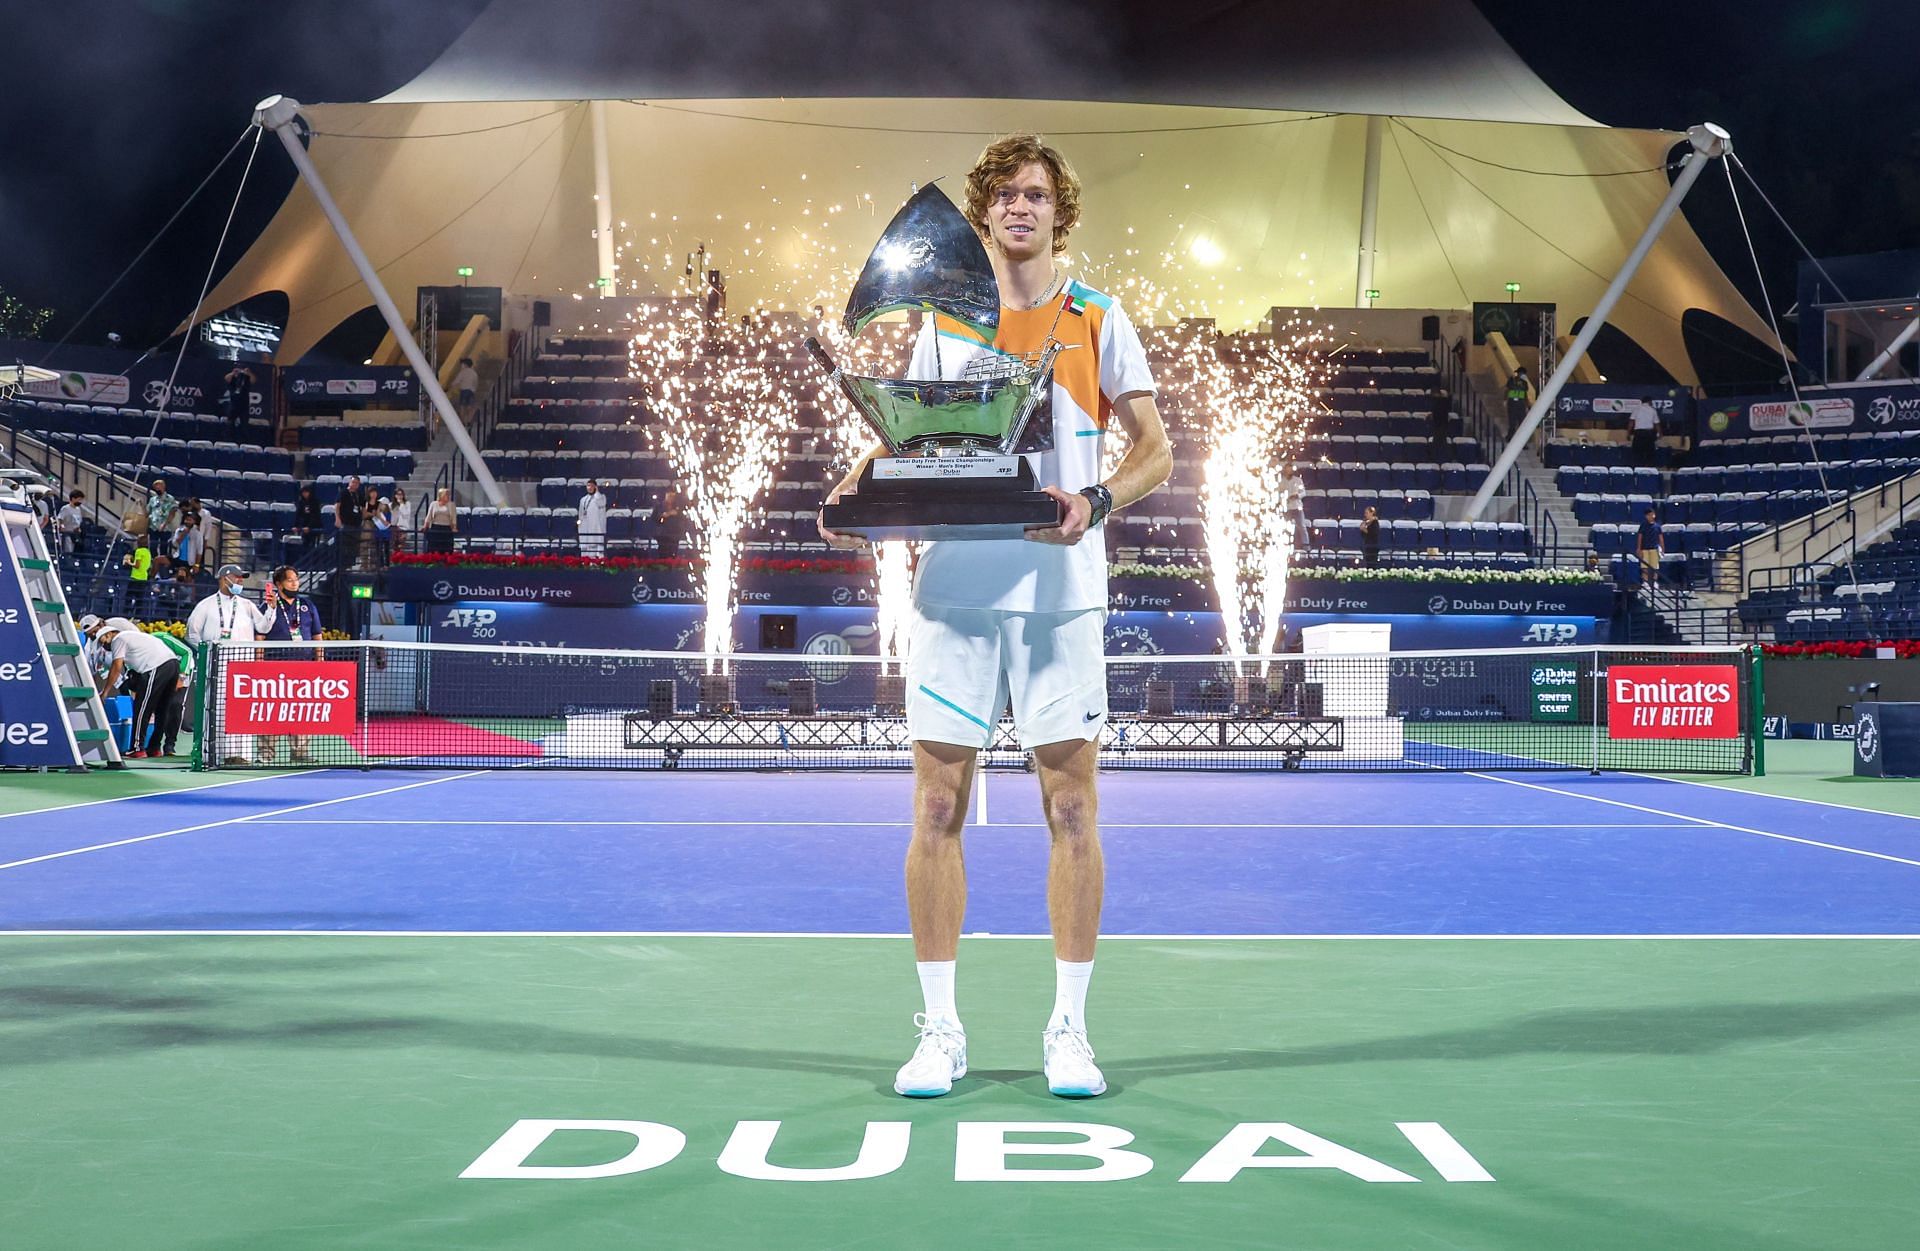 How to Watch the 2023 WTA Dubai Live Streaming, TV Options & Dubai